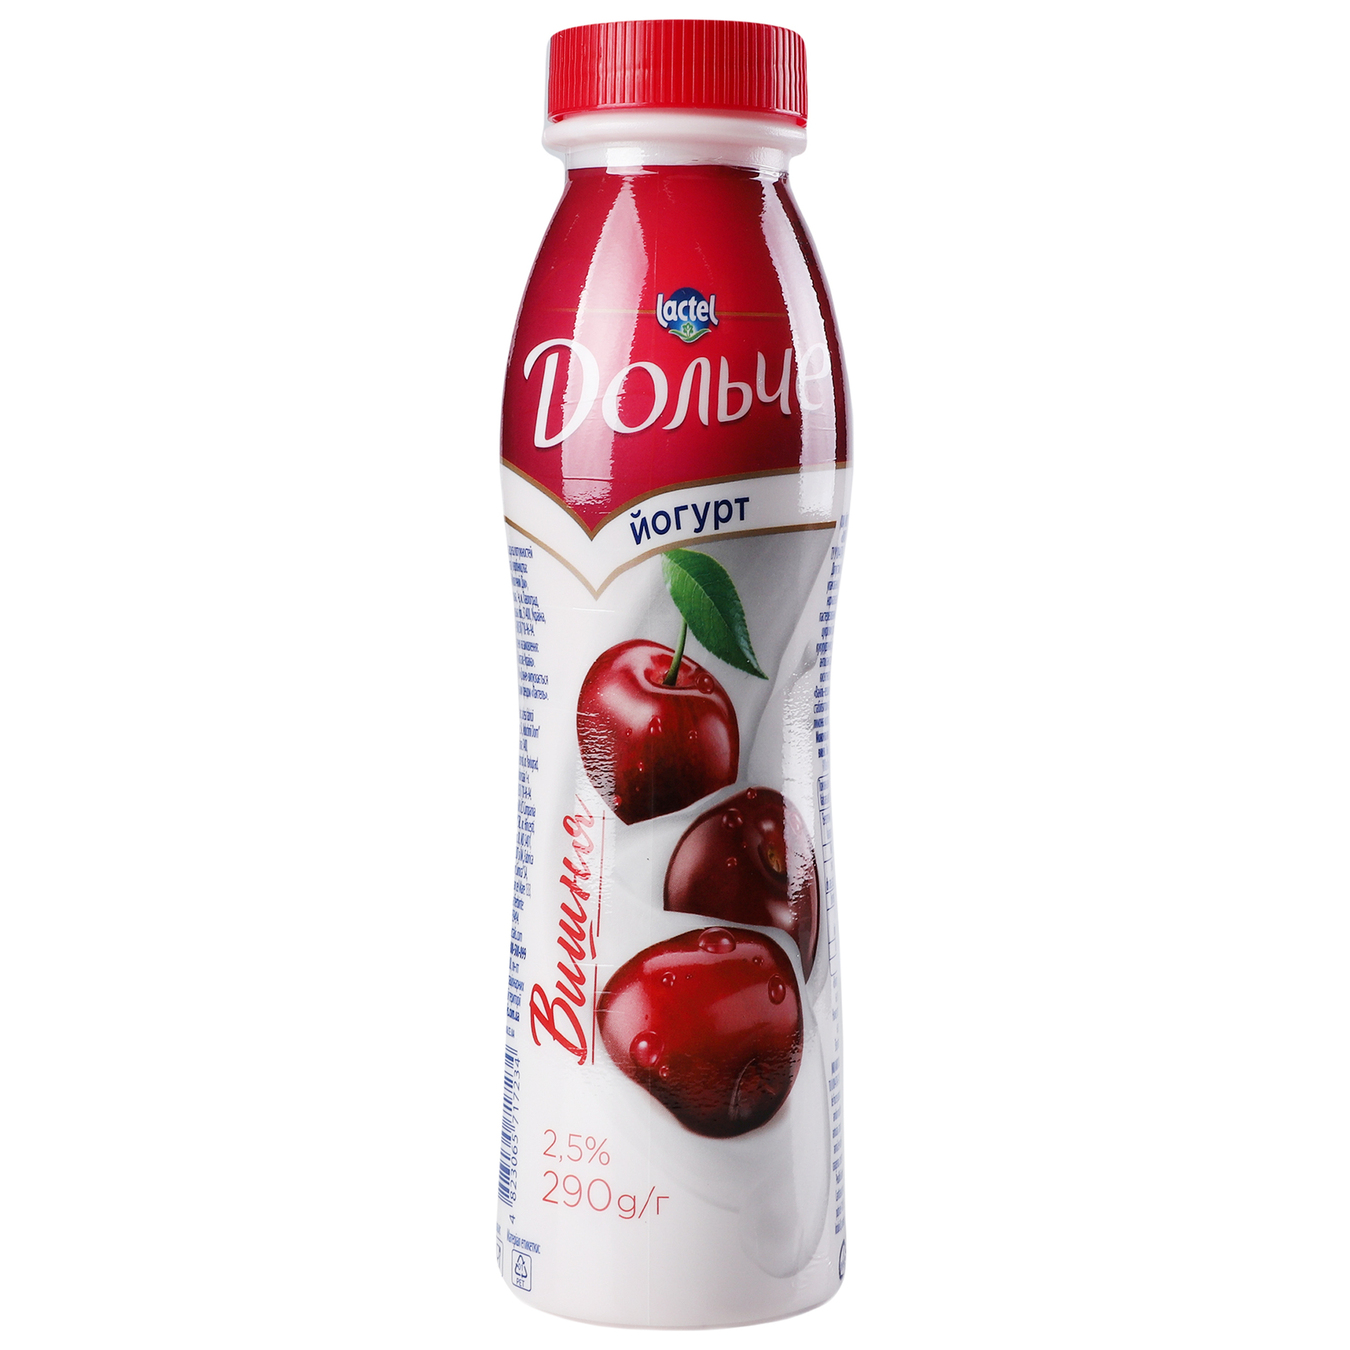 Lactel Dolce Cherry Flavored Yogurt 2,5% 290g 2